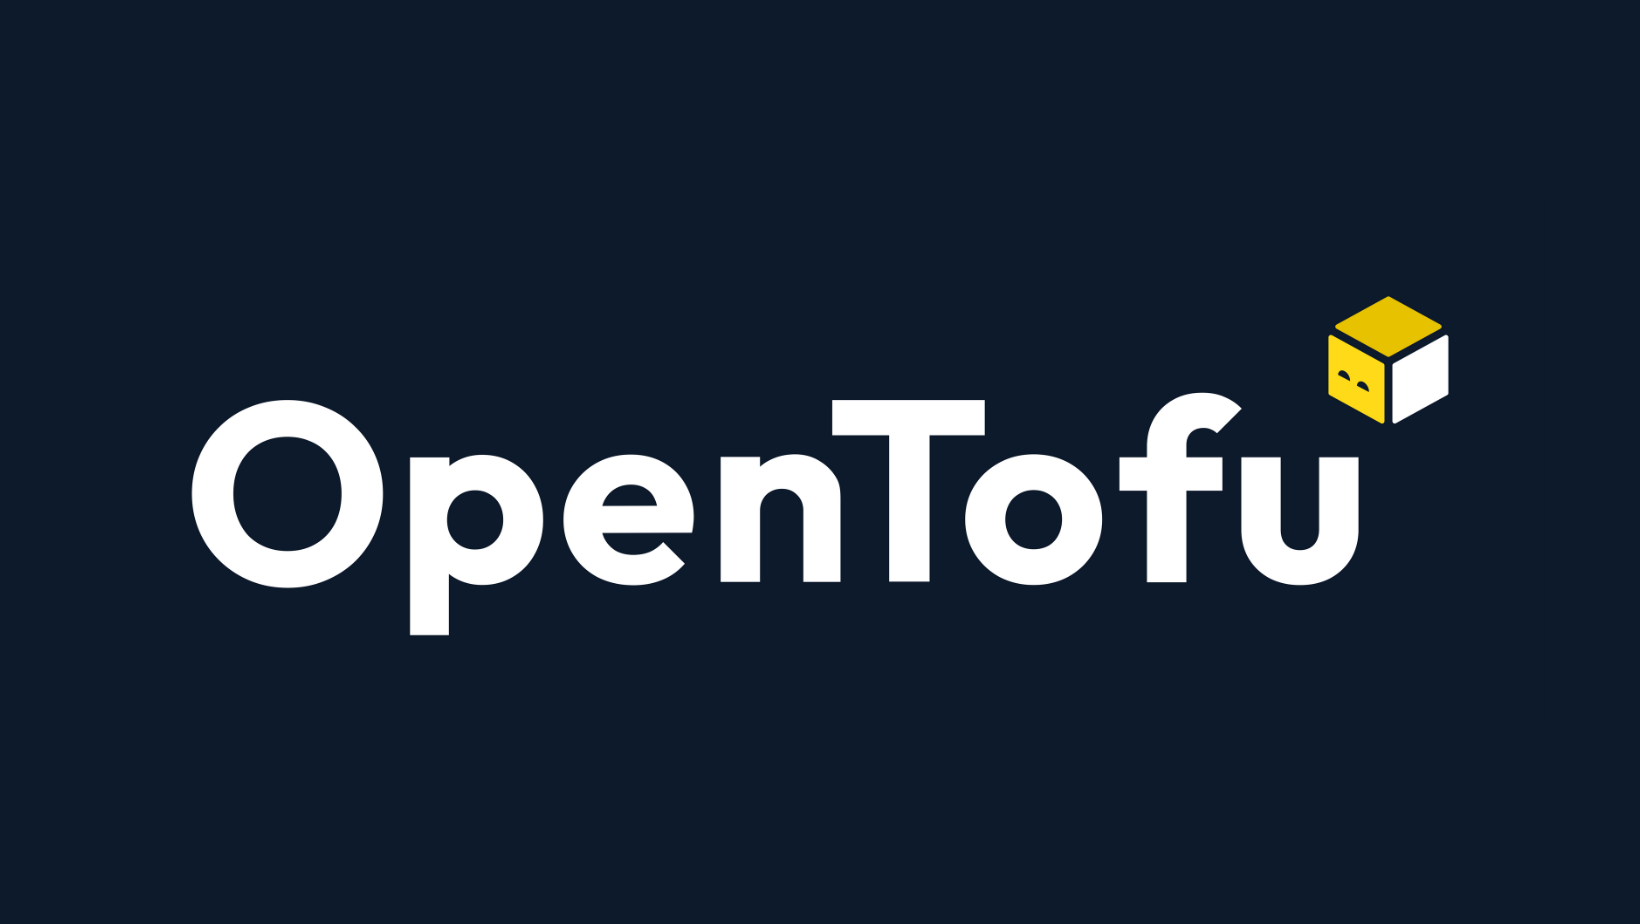 OpenTofu: A Triumphant Response to Terraform’s License Change